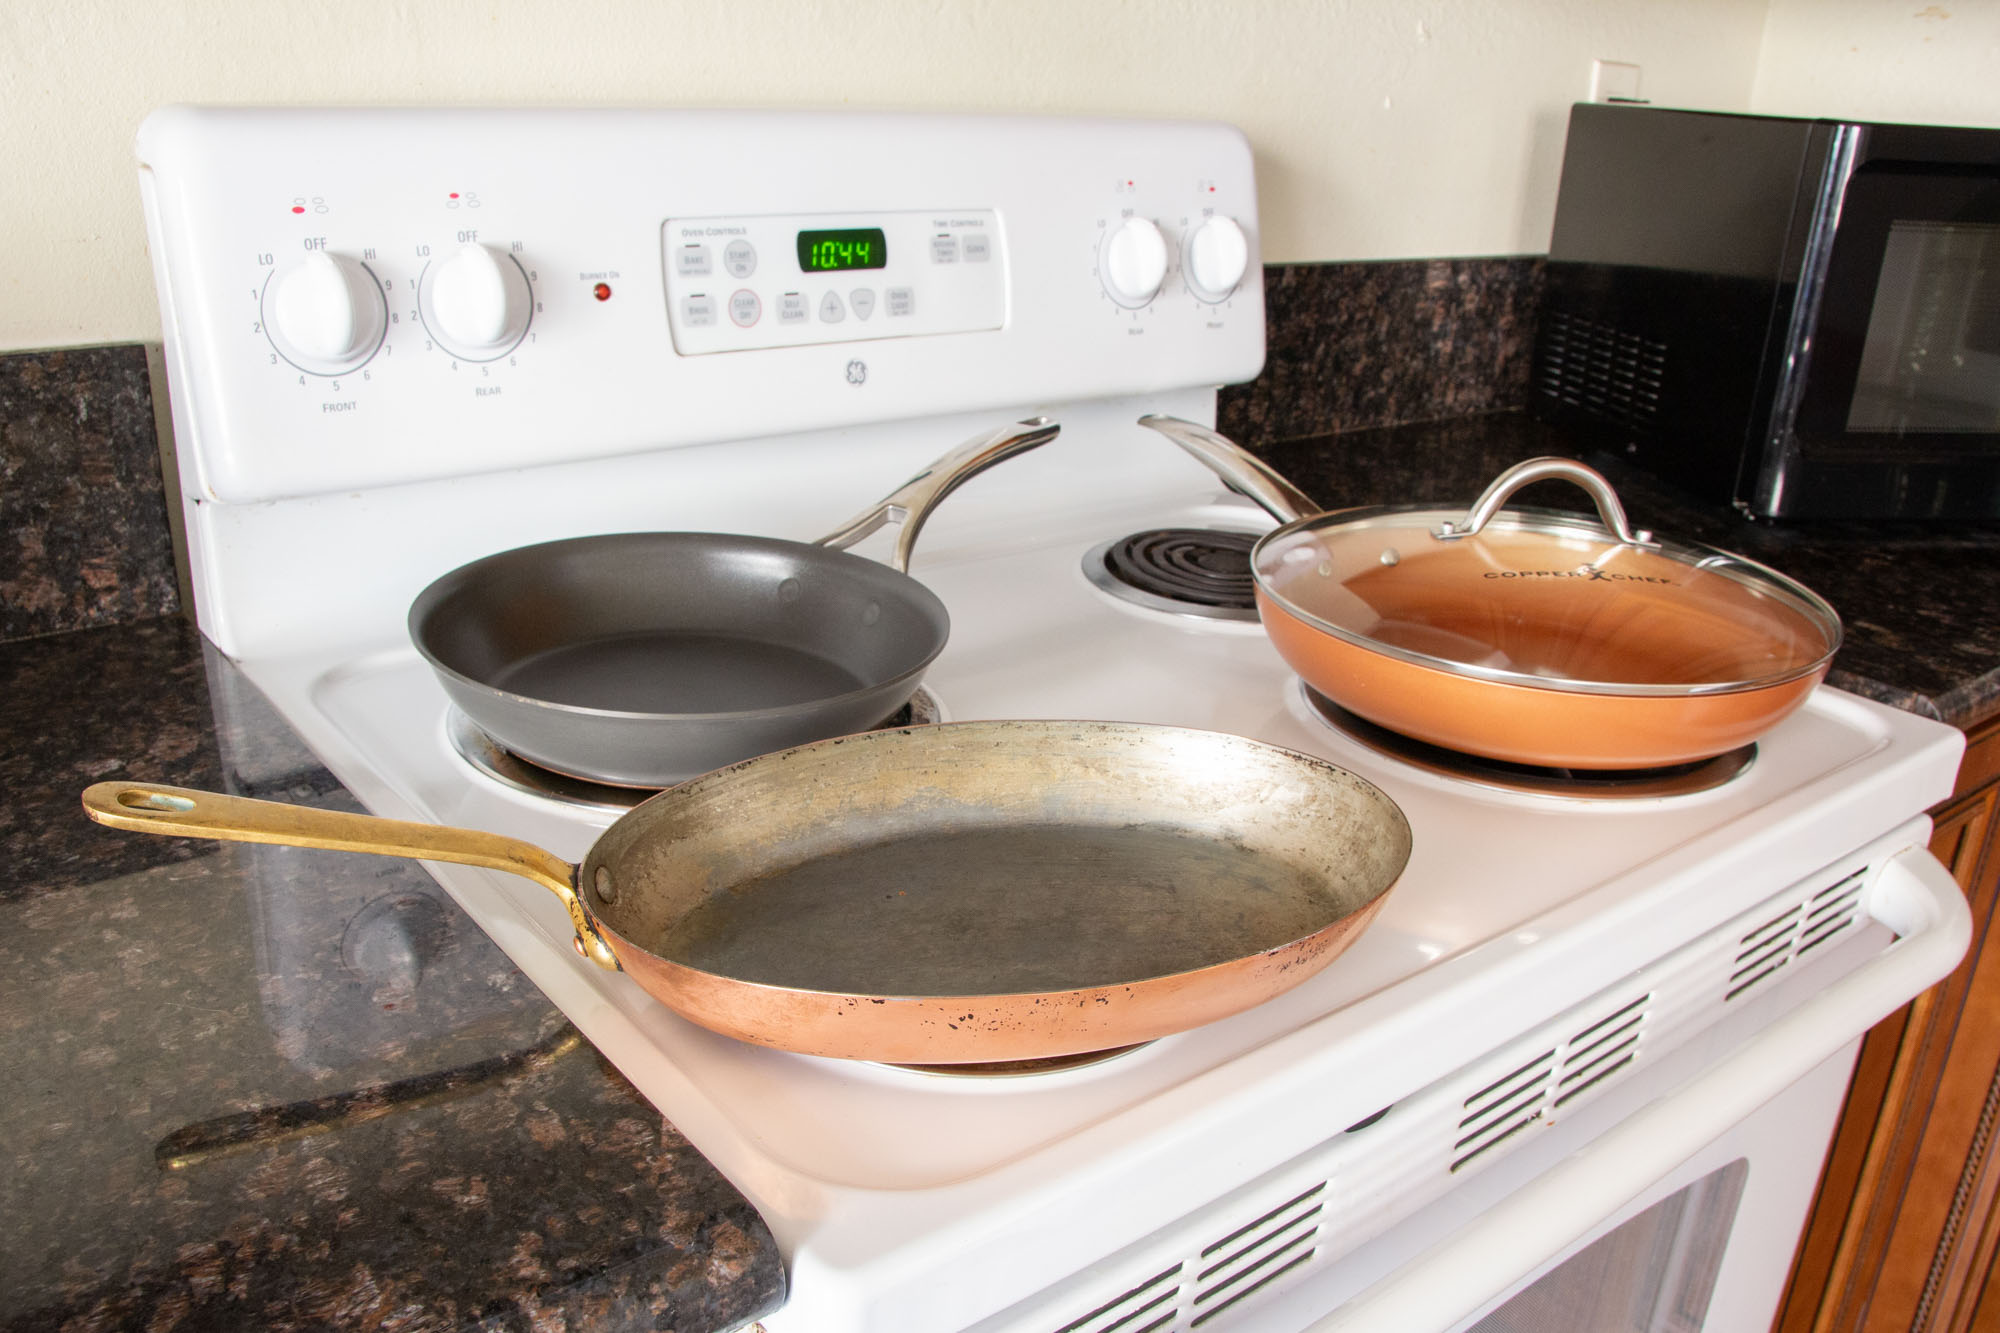 Copper Chef Pan Recipes 